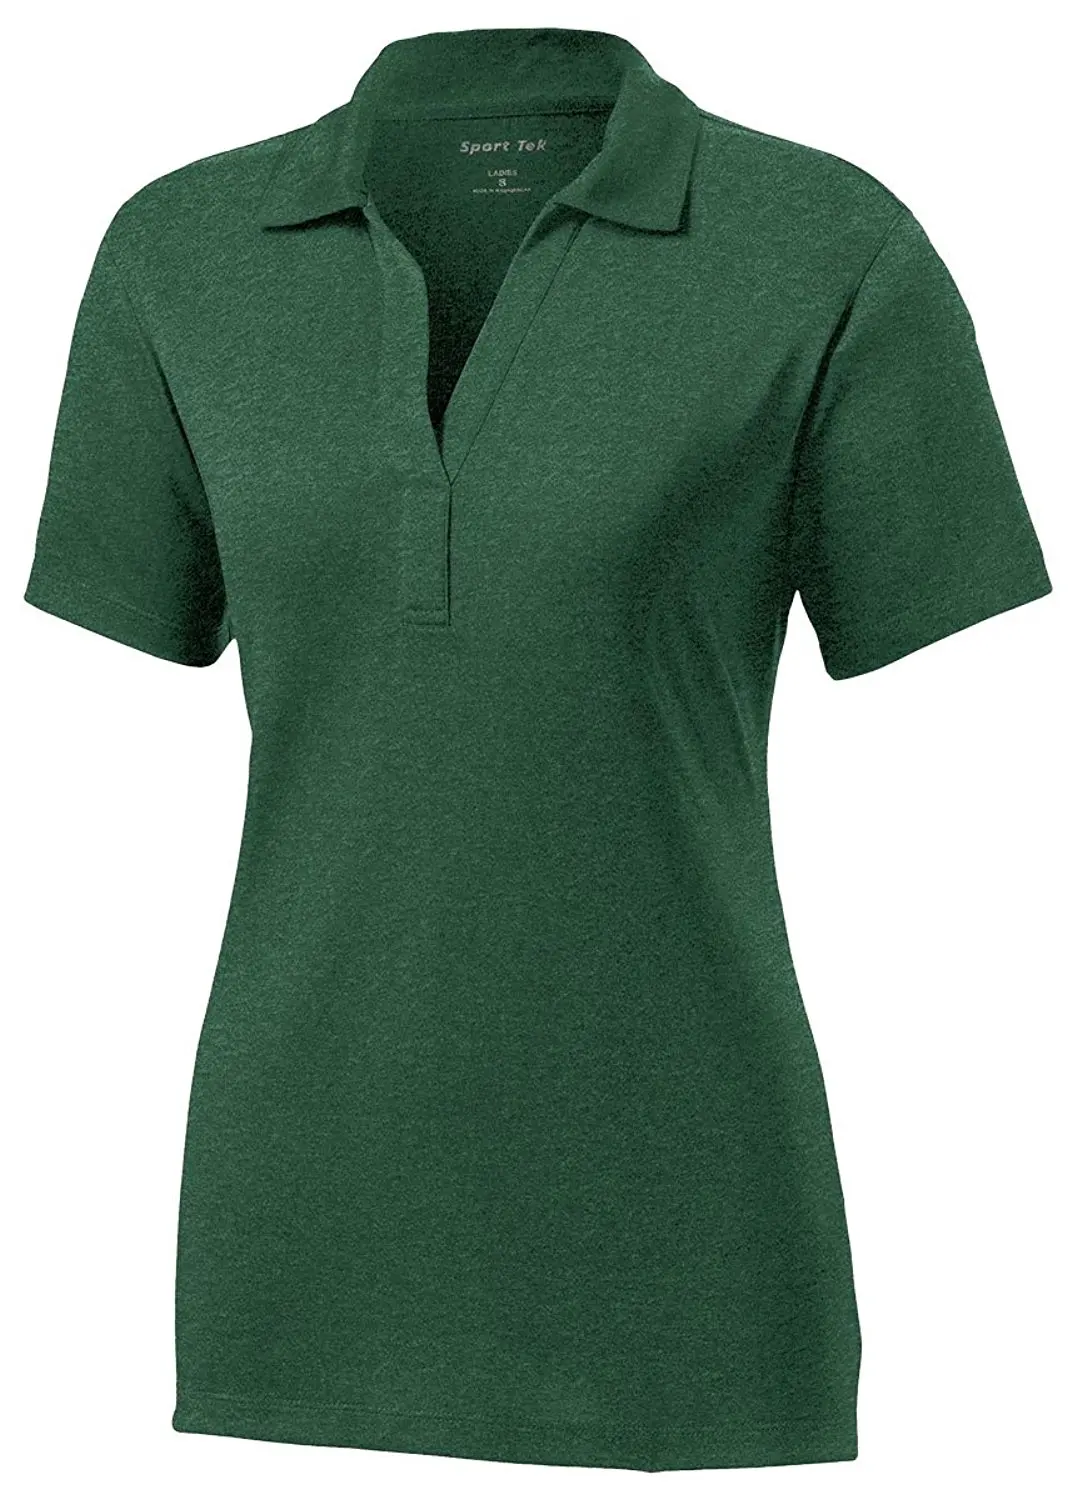 Cheap Green Polo Shirt For Women, find 